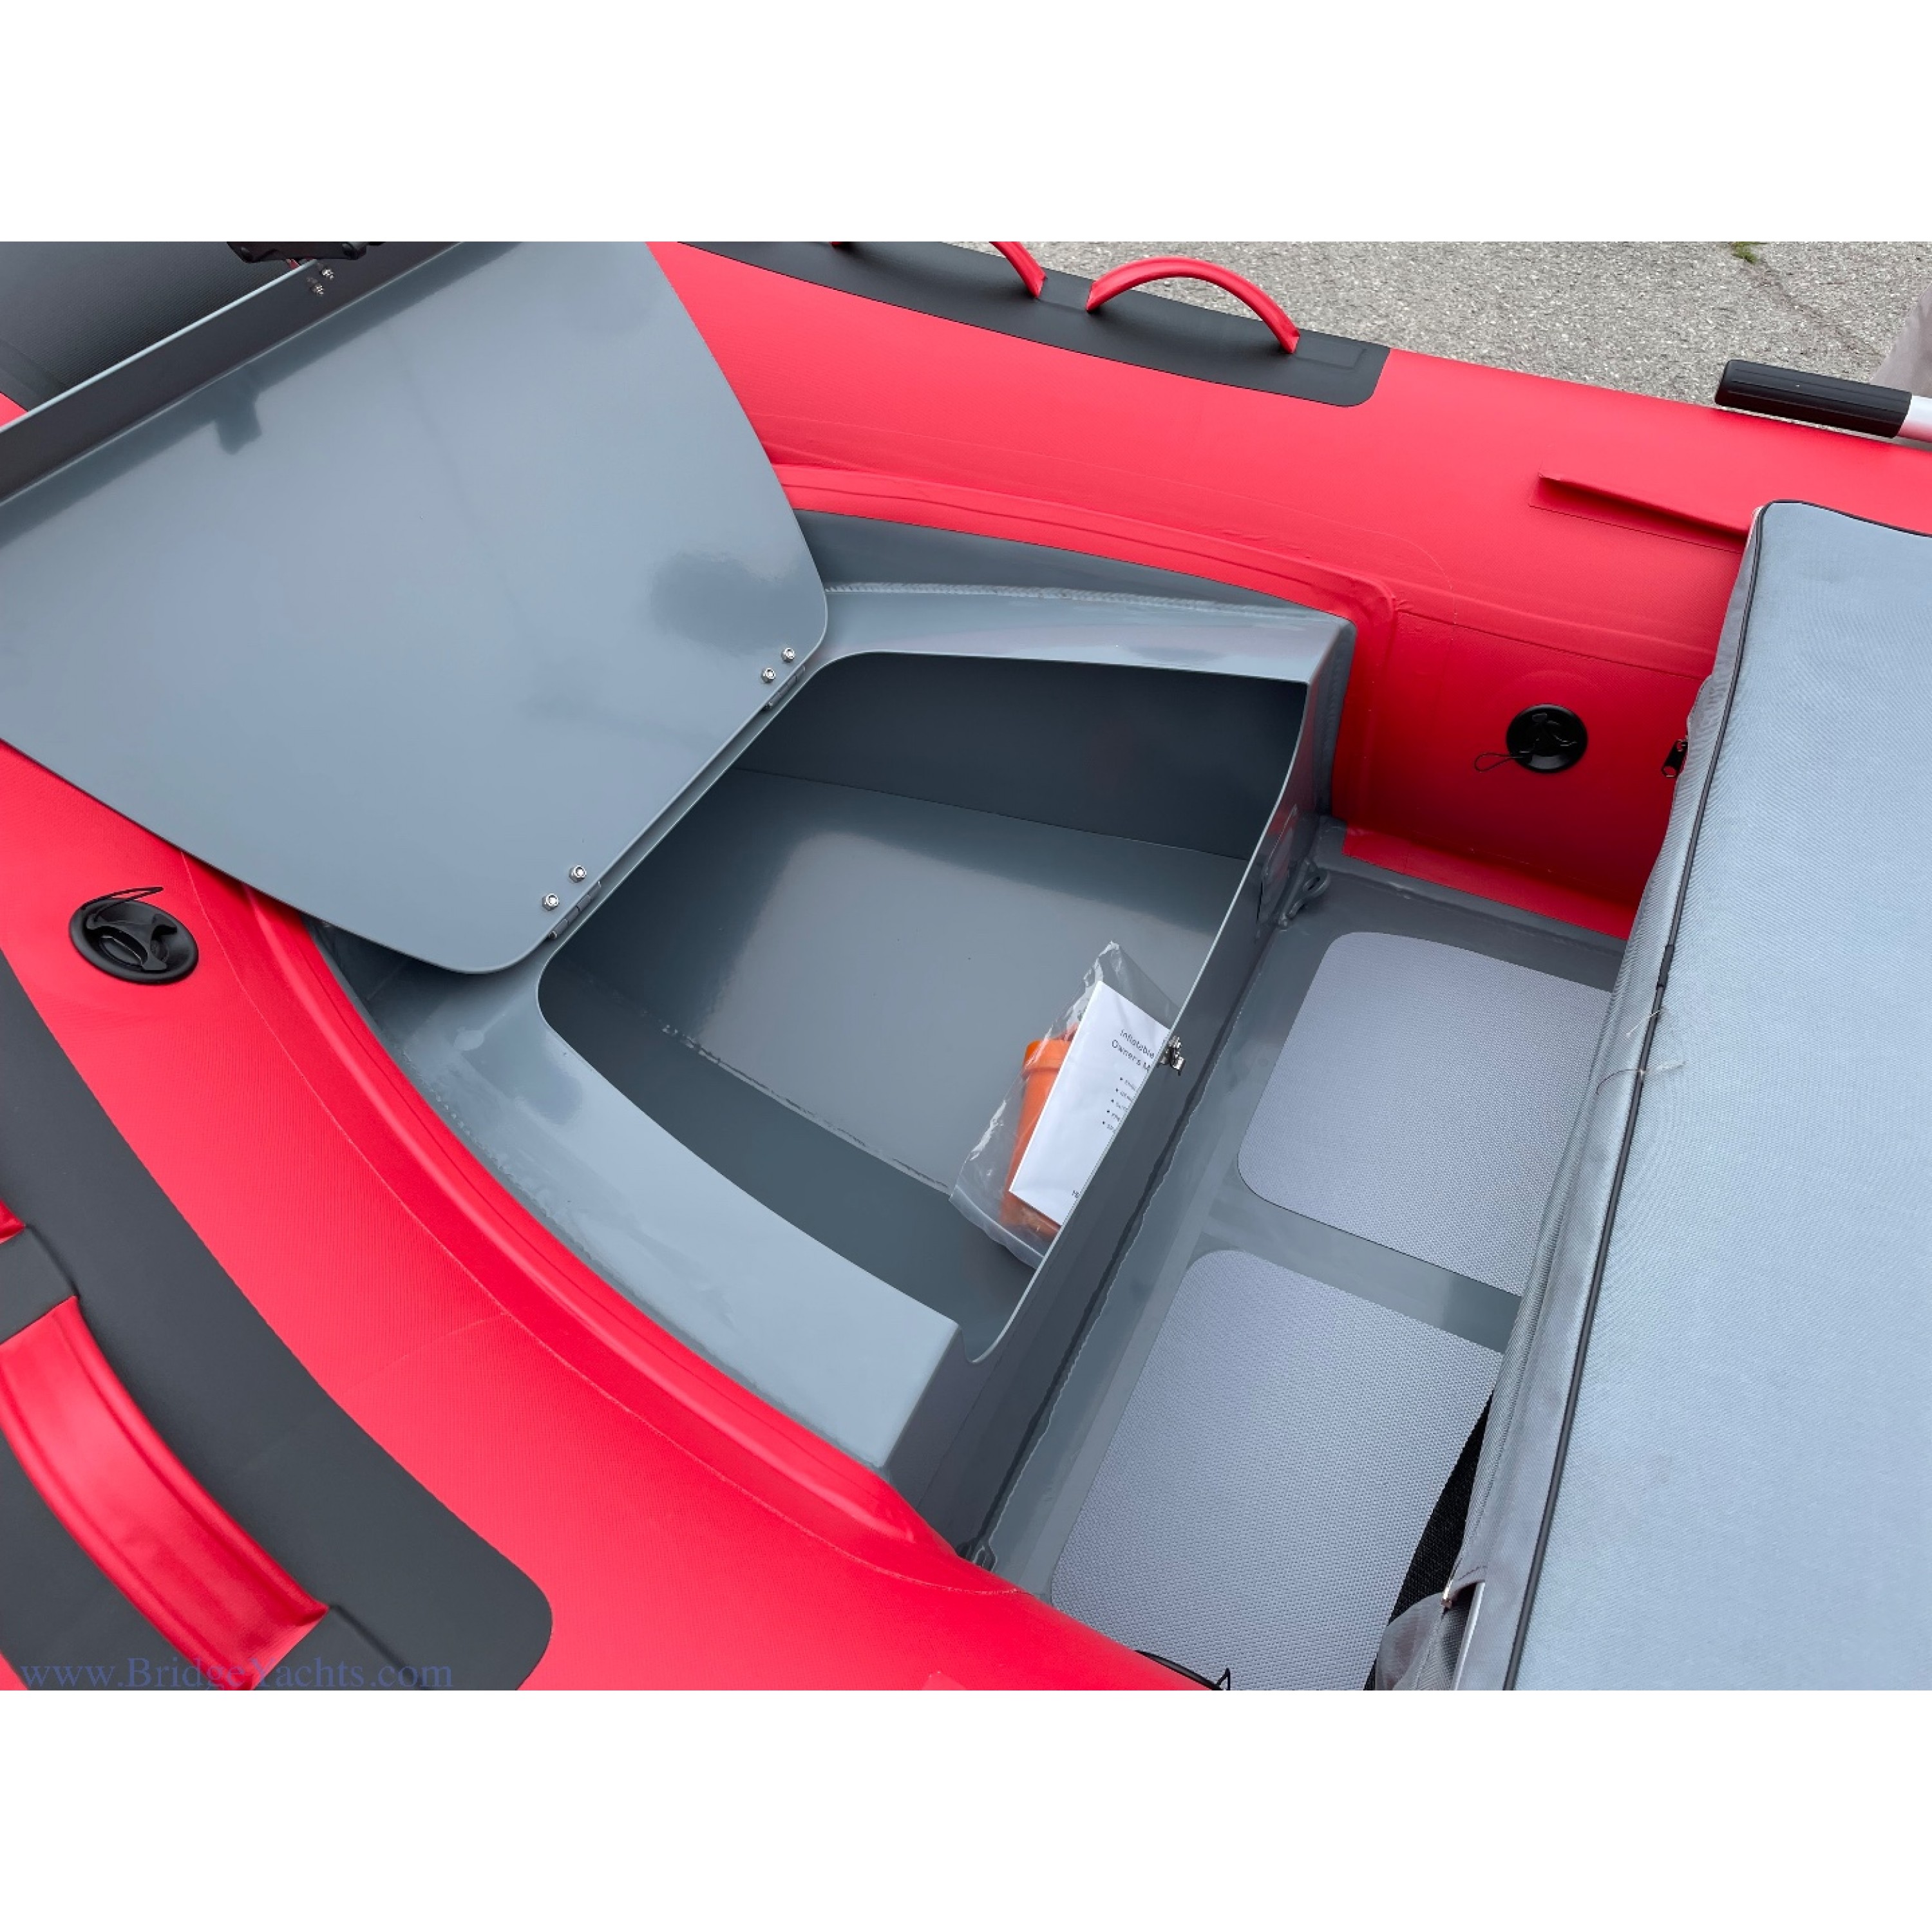 ALD300 10ft Classic Double Deck Aluminum Rib Red/Blk